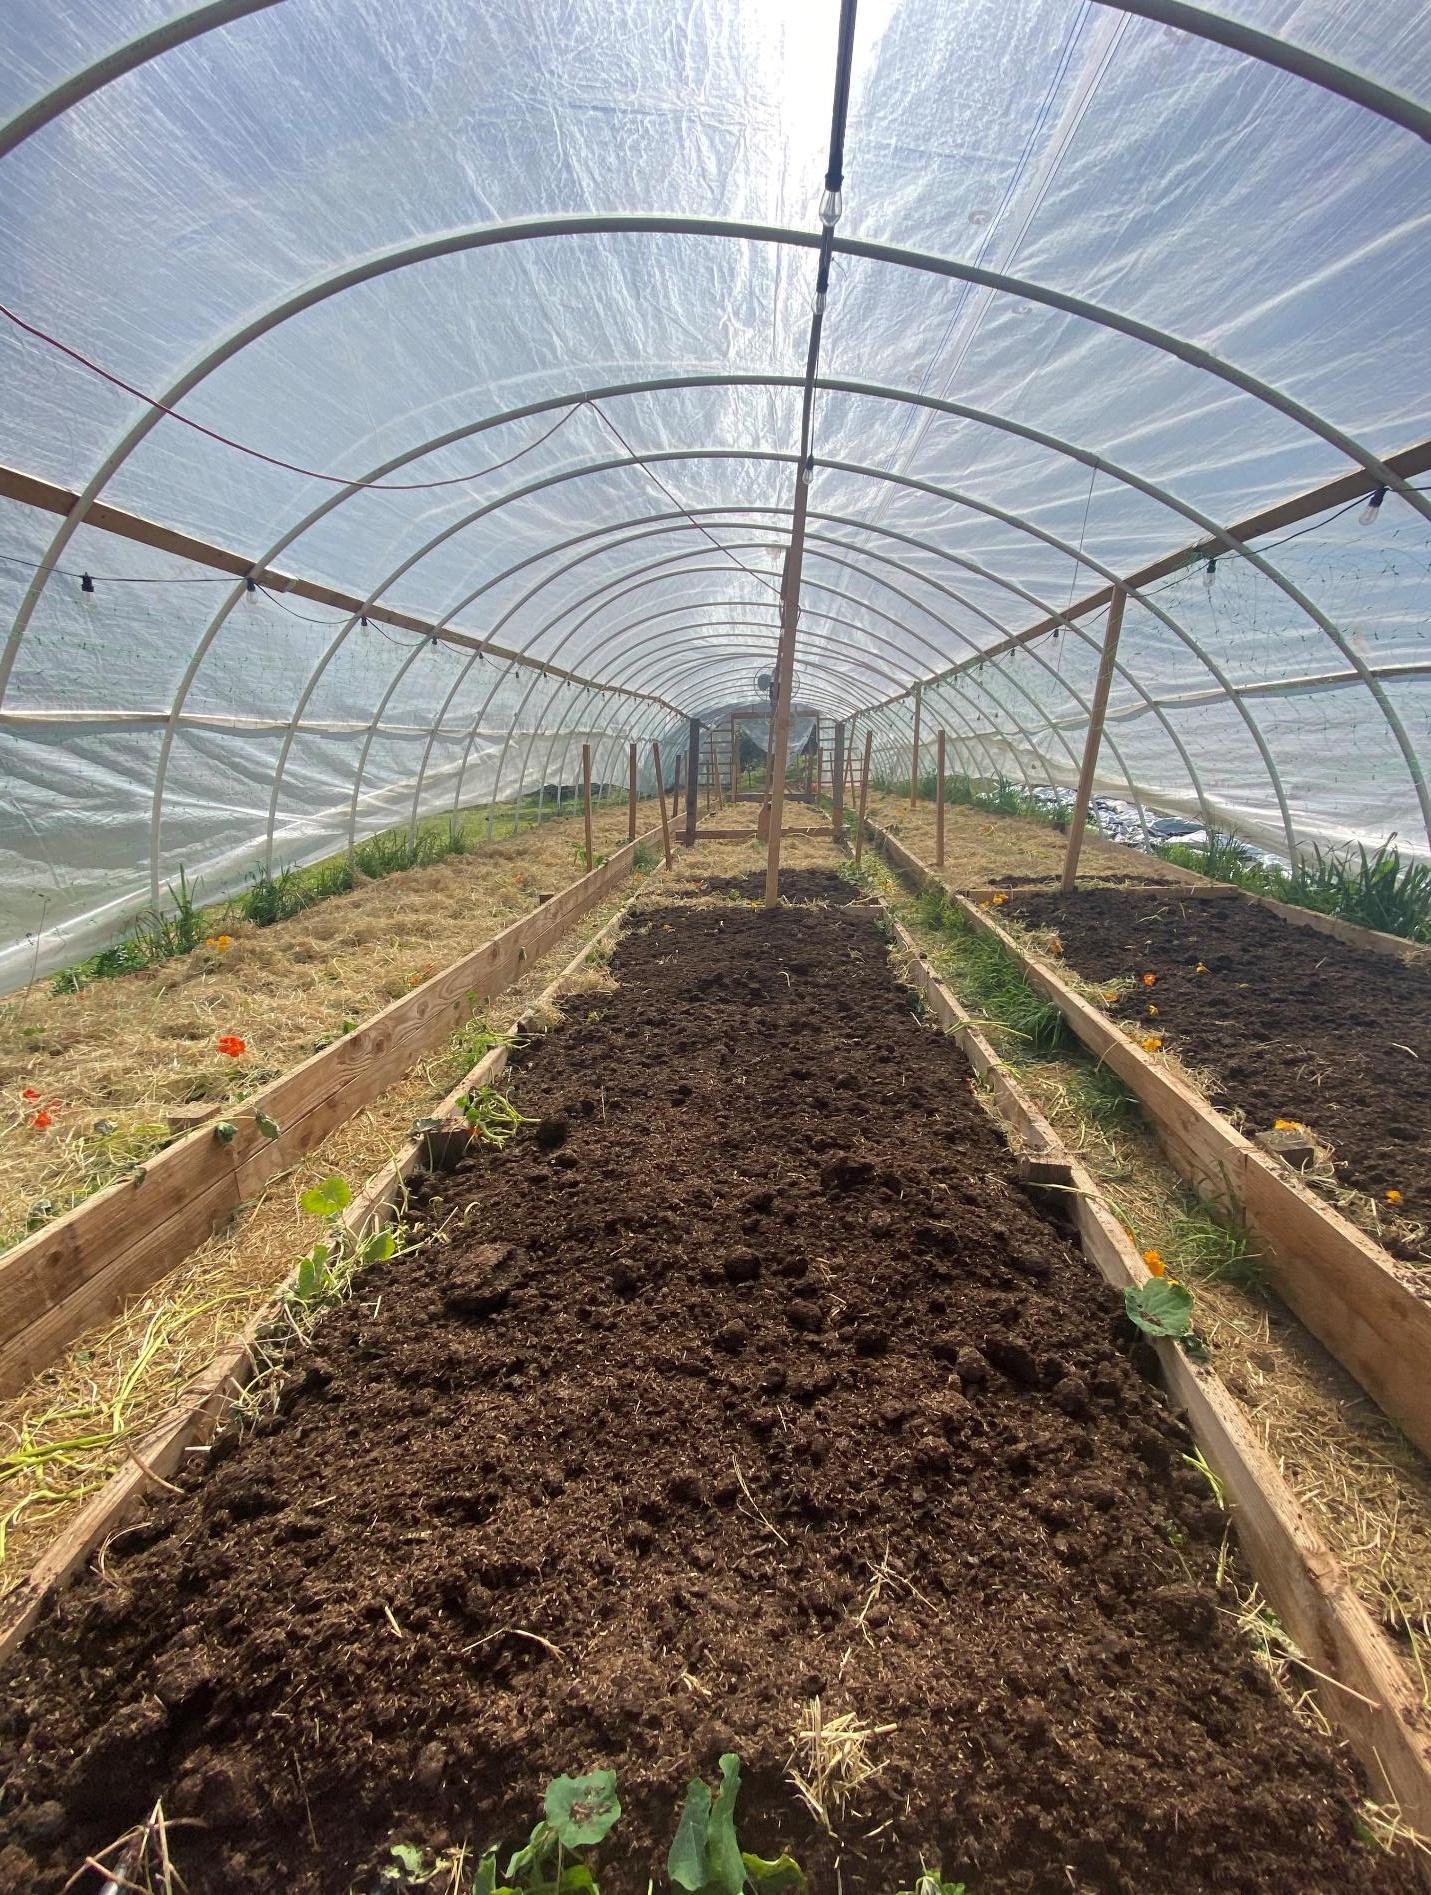 Cannabis soil in greenhouse grow